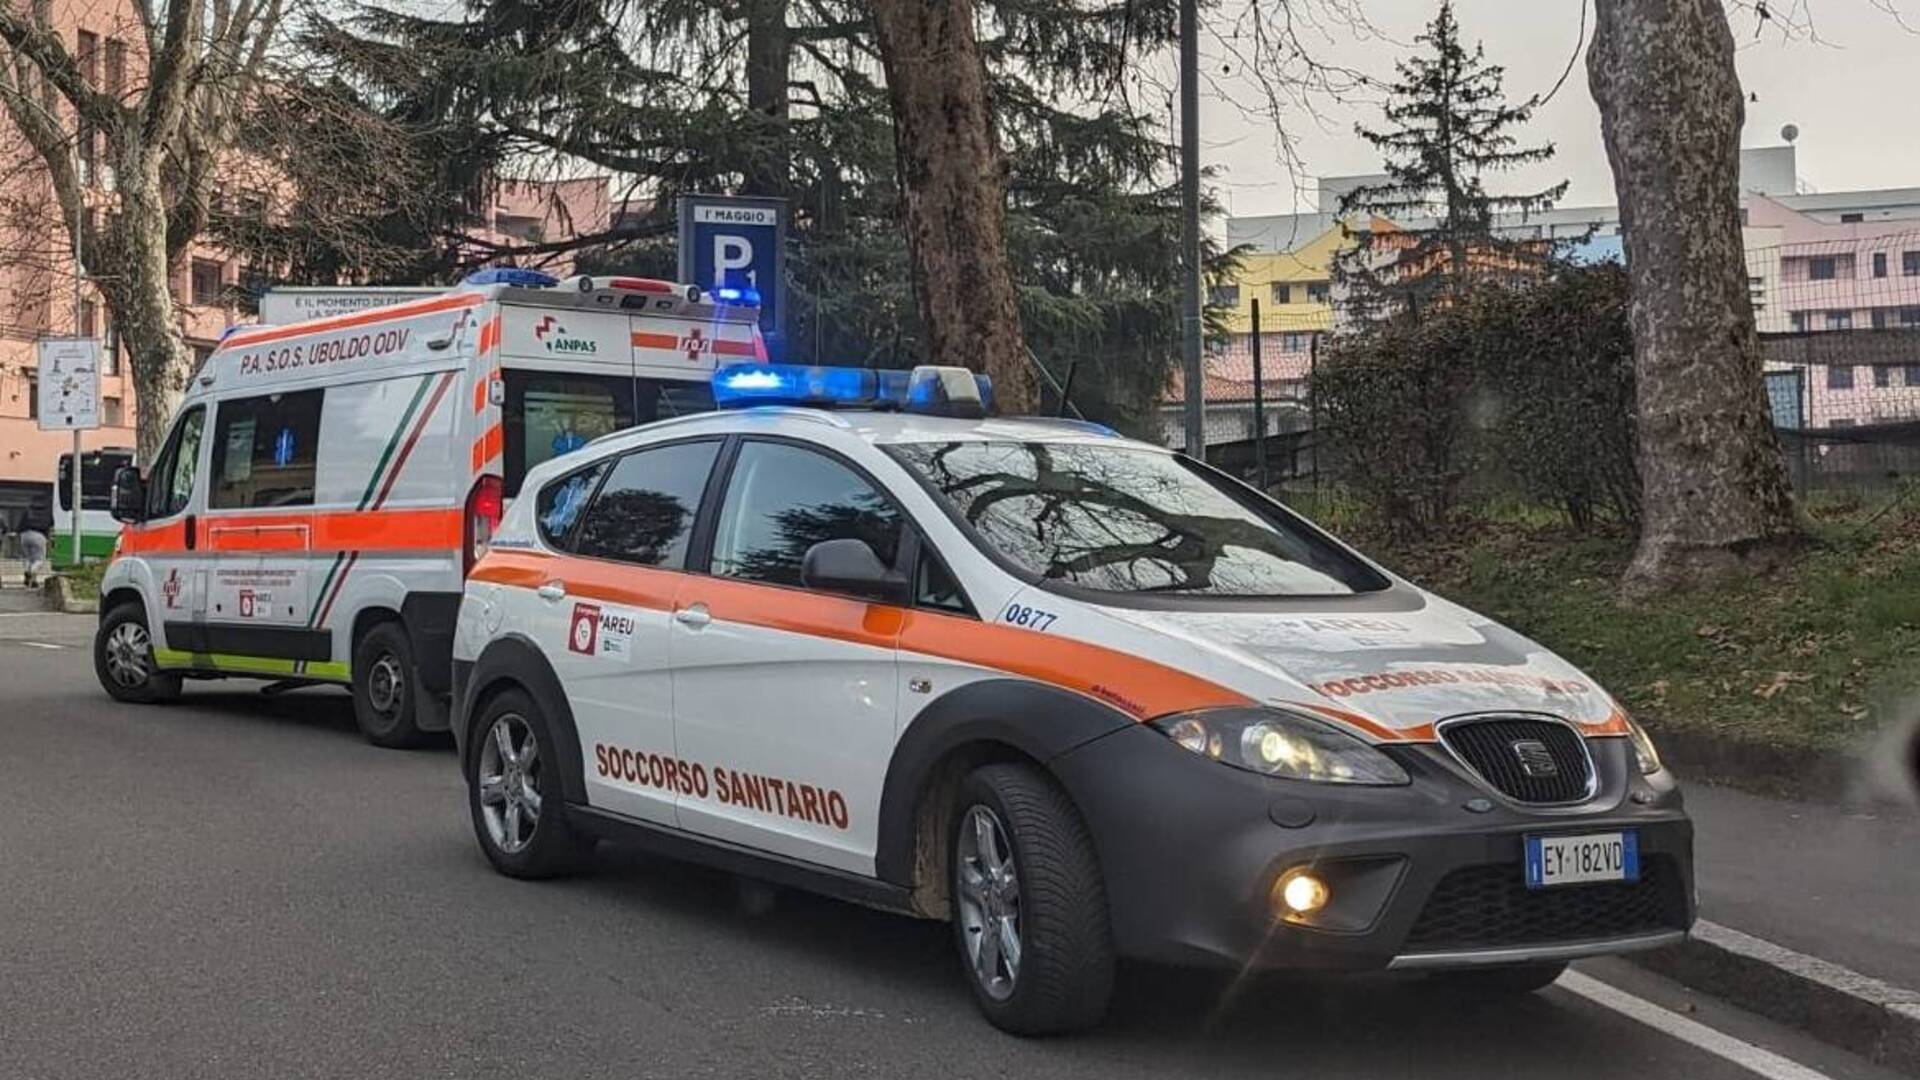 Panorama cronaca: due ciclisti feriti a Saronno, motociclisti contusi a Uboldo, intossicazione etilica in stazione a Cesate